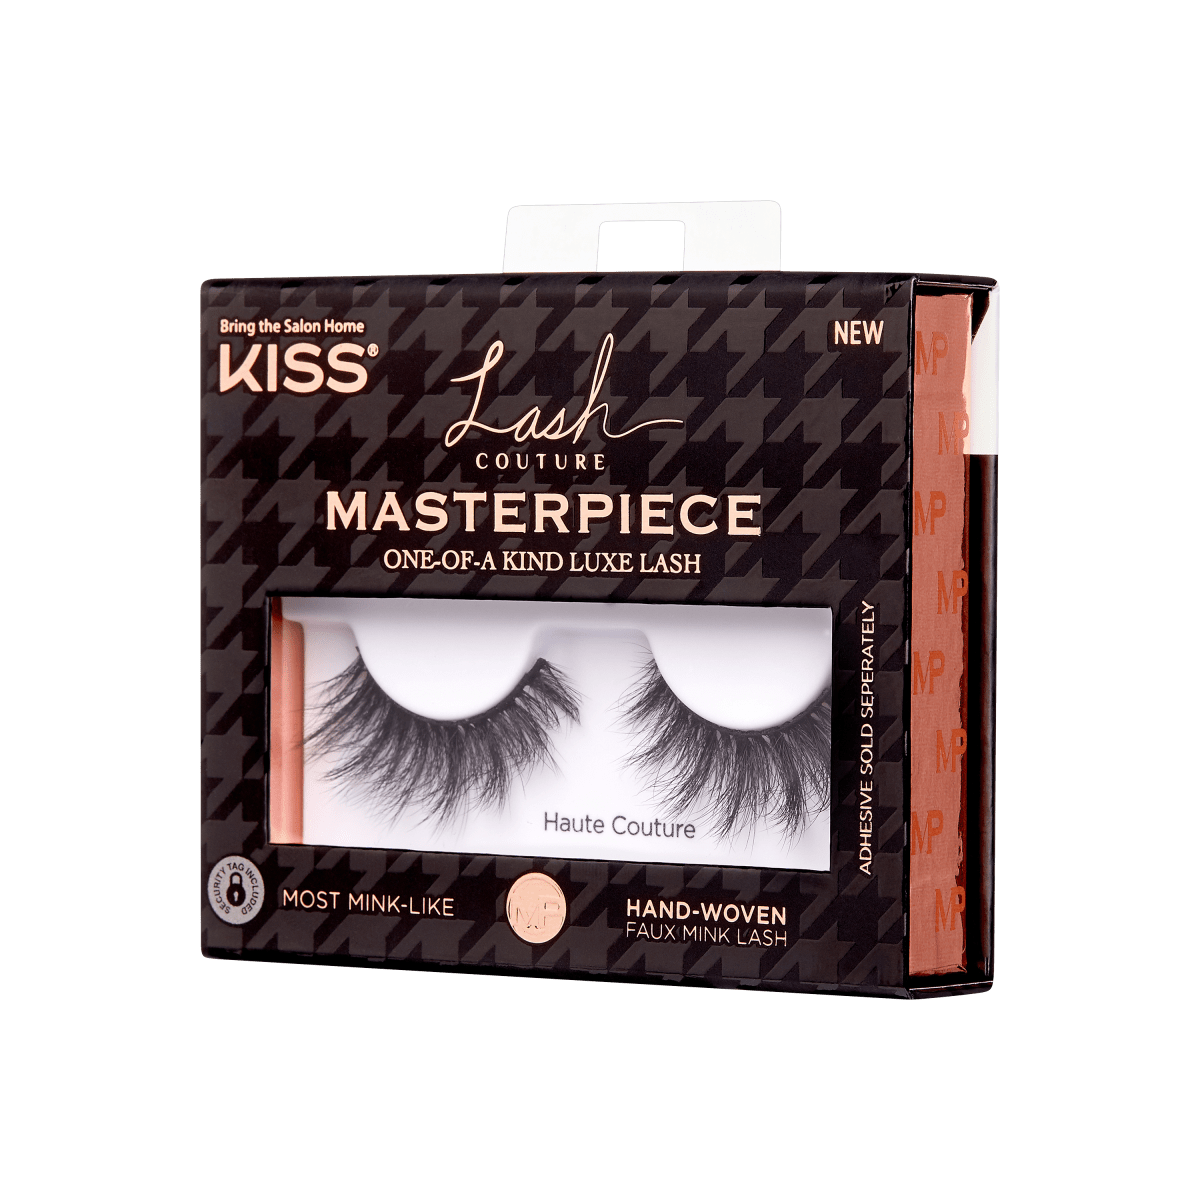 KISS Masterpiece, False Eyelashes, Haute Couture, 16mm, 1 Pair